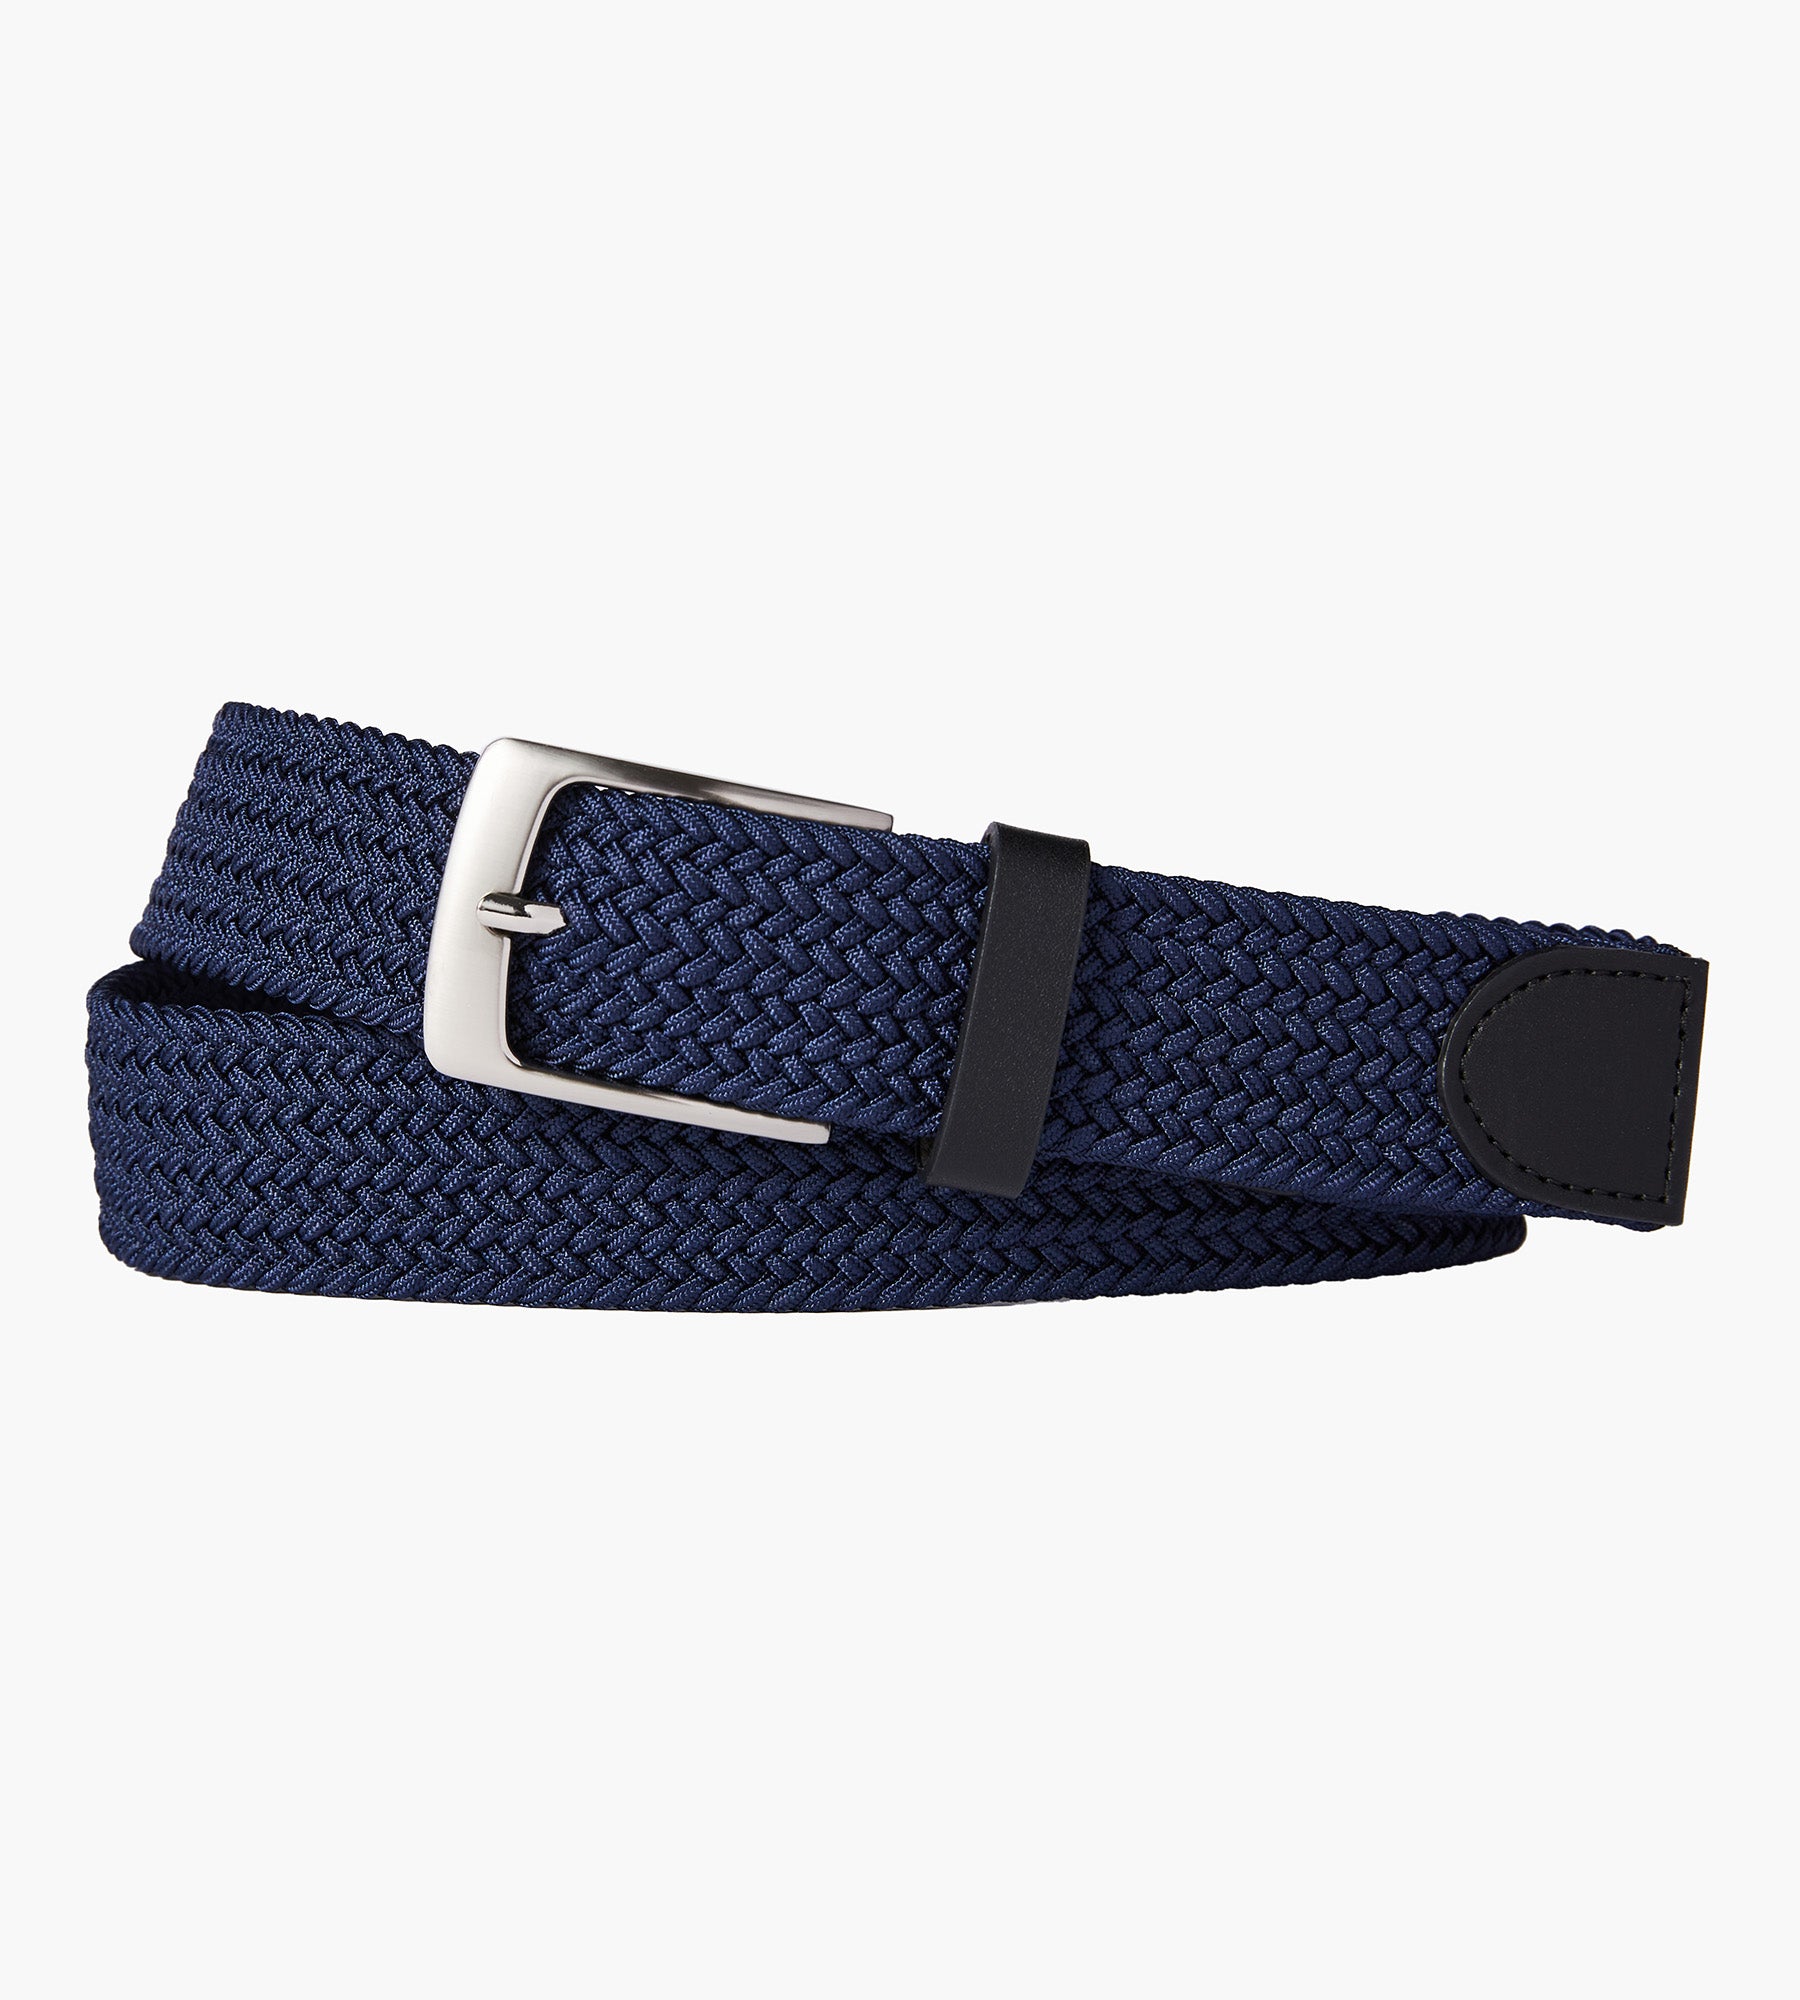 Stretch Web Golf Belt in Navy Blue